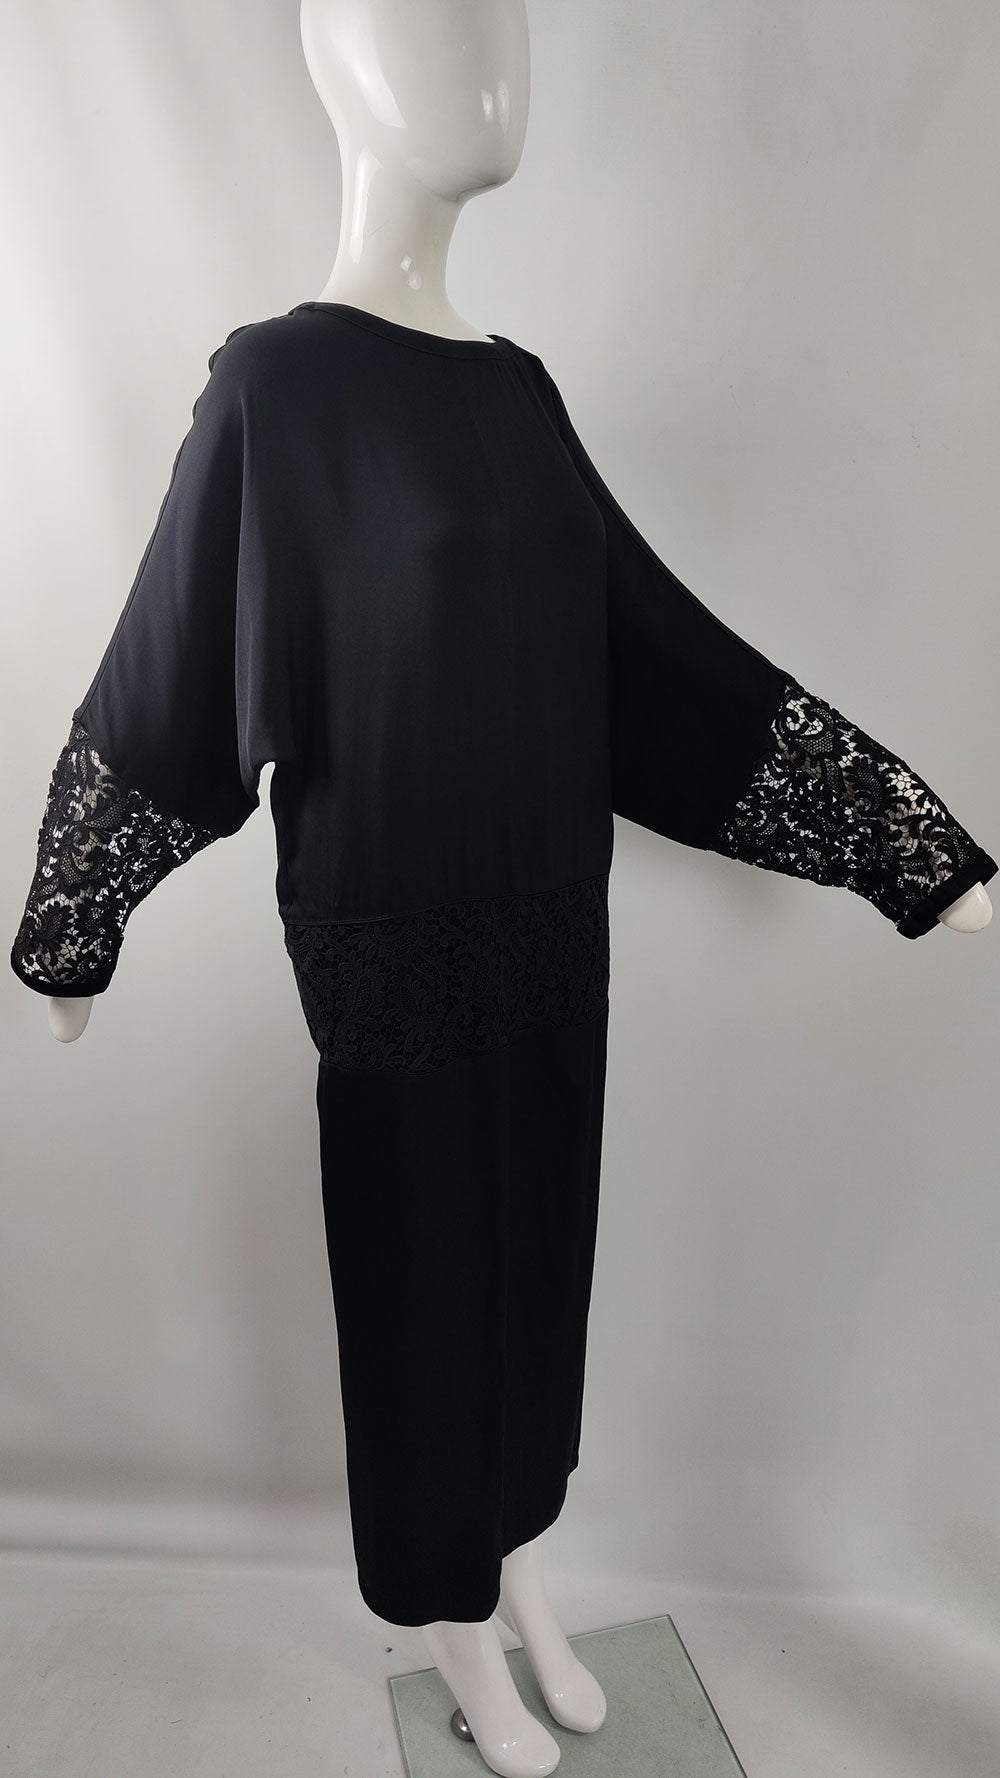 Gianni Versace Vintage Black Silk & Lace Batwing Dress, A/W 1985